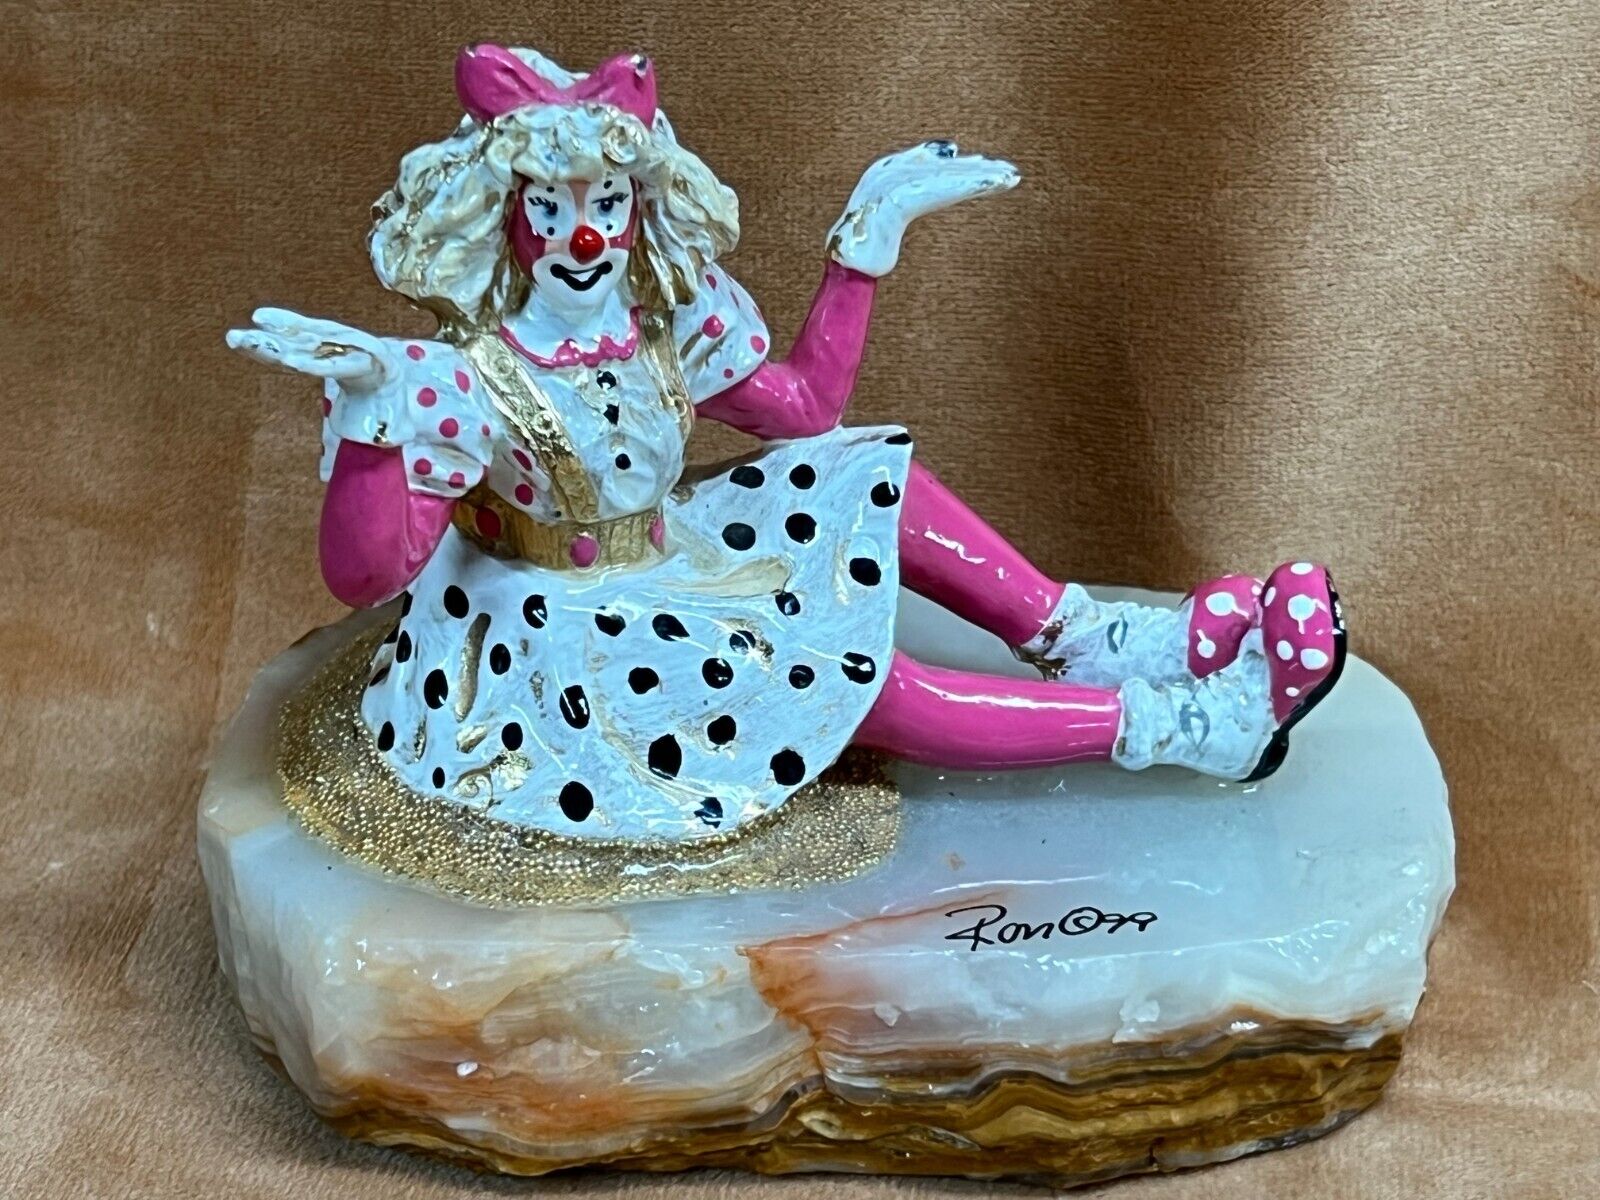 1999 Ron Lee Signed Girl Clown Sculpture in Polka Dot  Dress